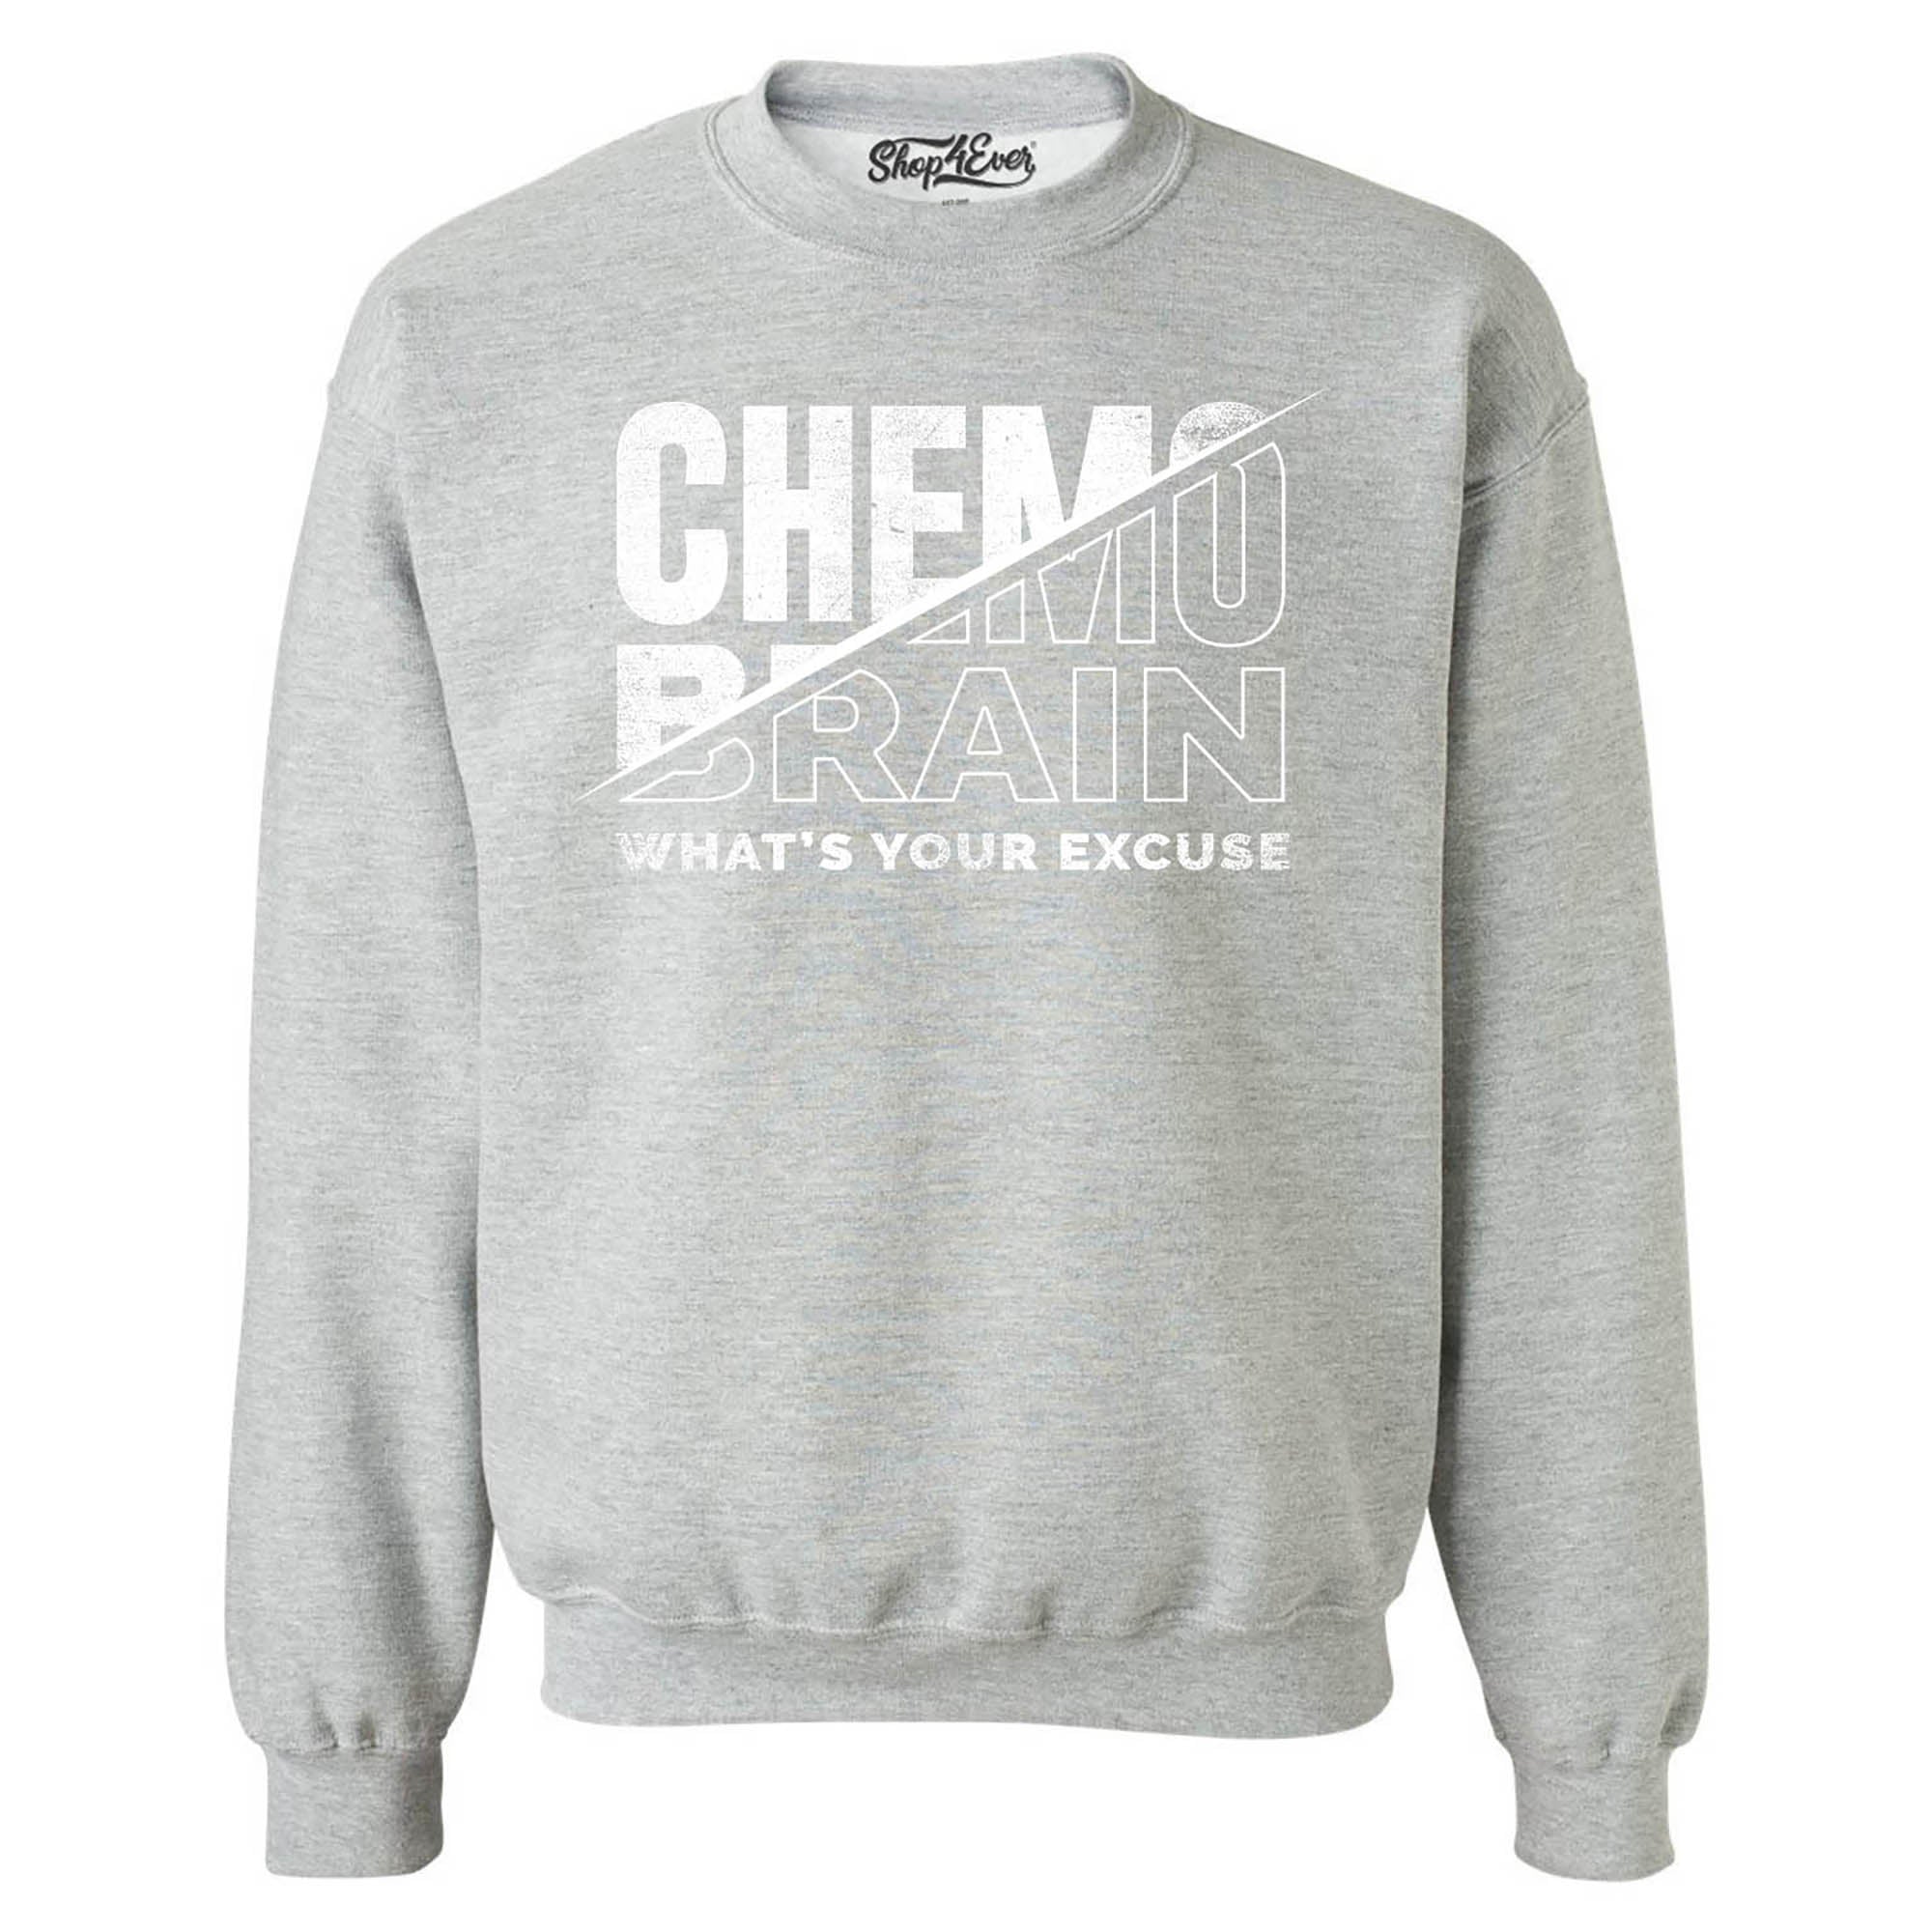 Chemo Brain What's Your Excuse? Funny Crewneck Sweatshirts